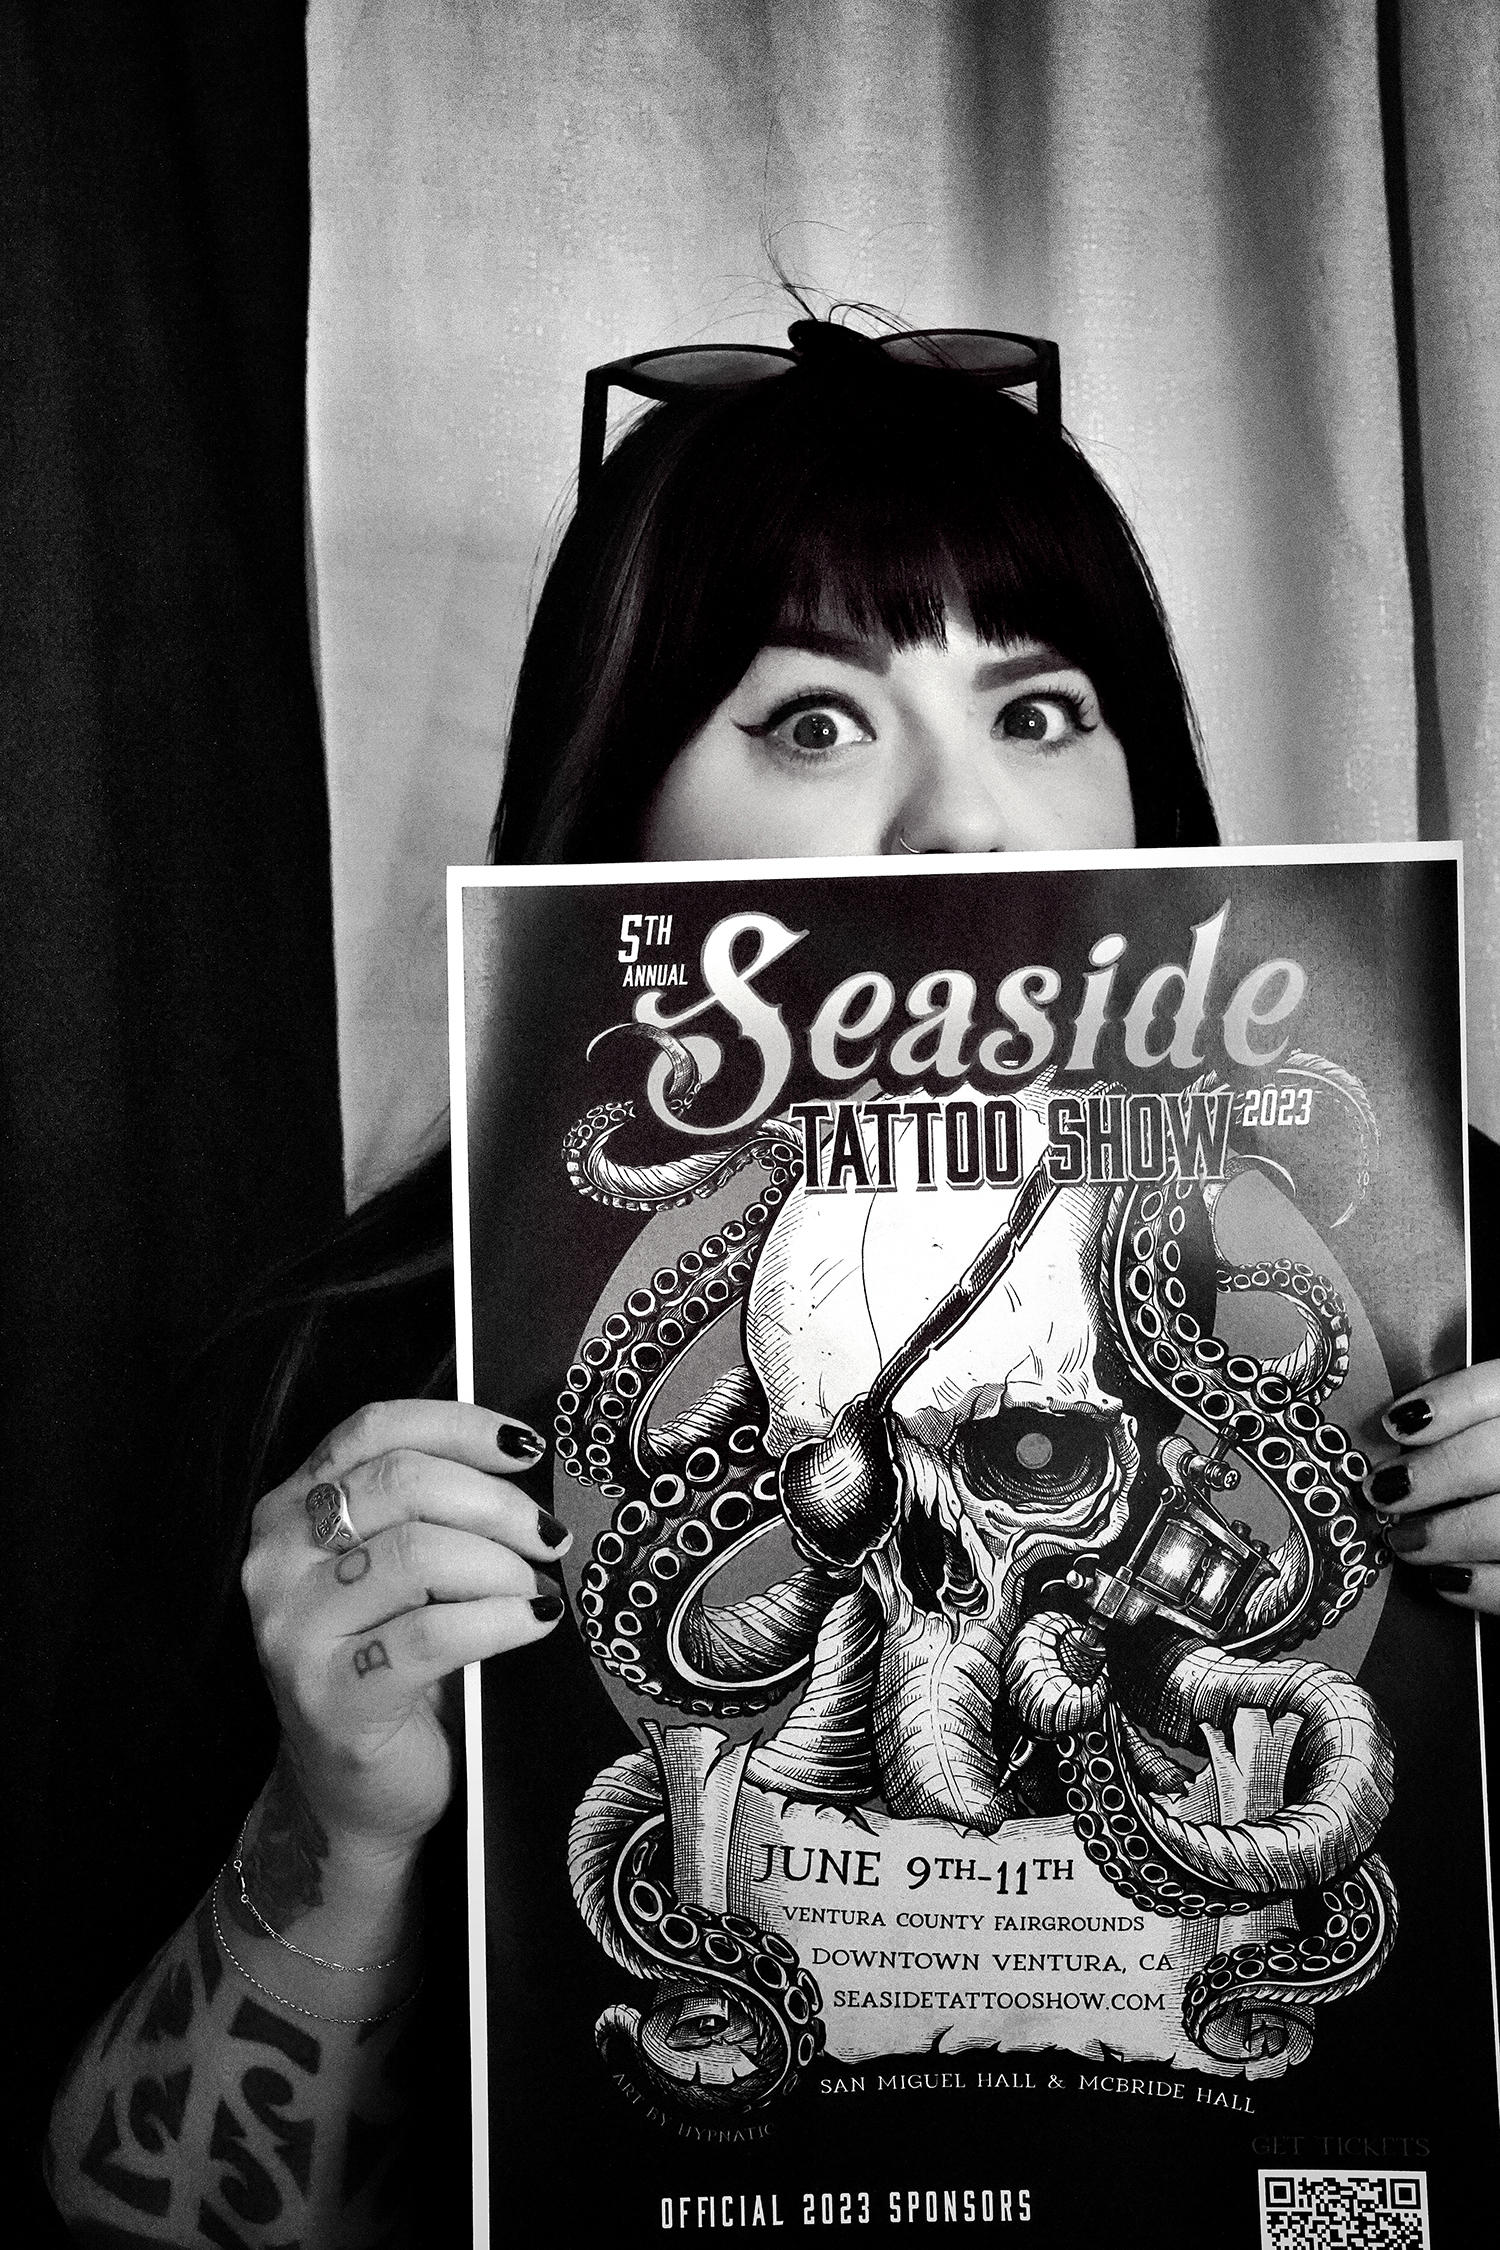 seaside tattoo show organizer Christina diaz